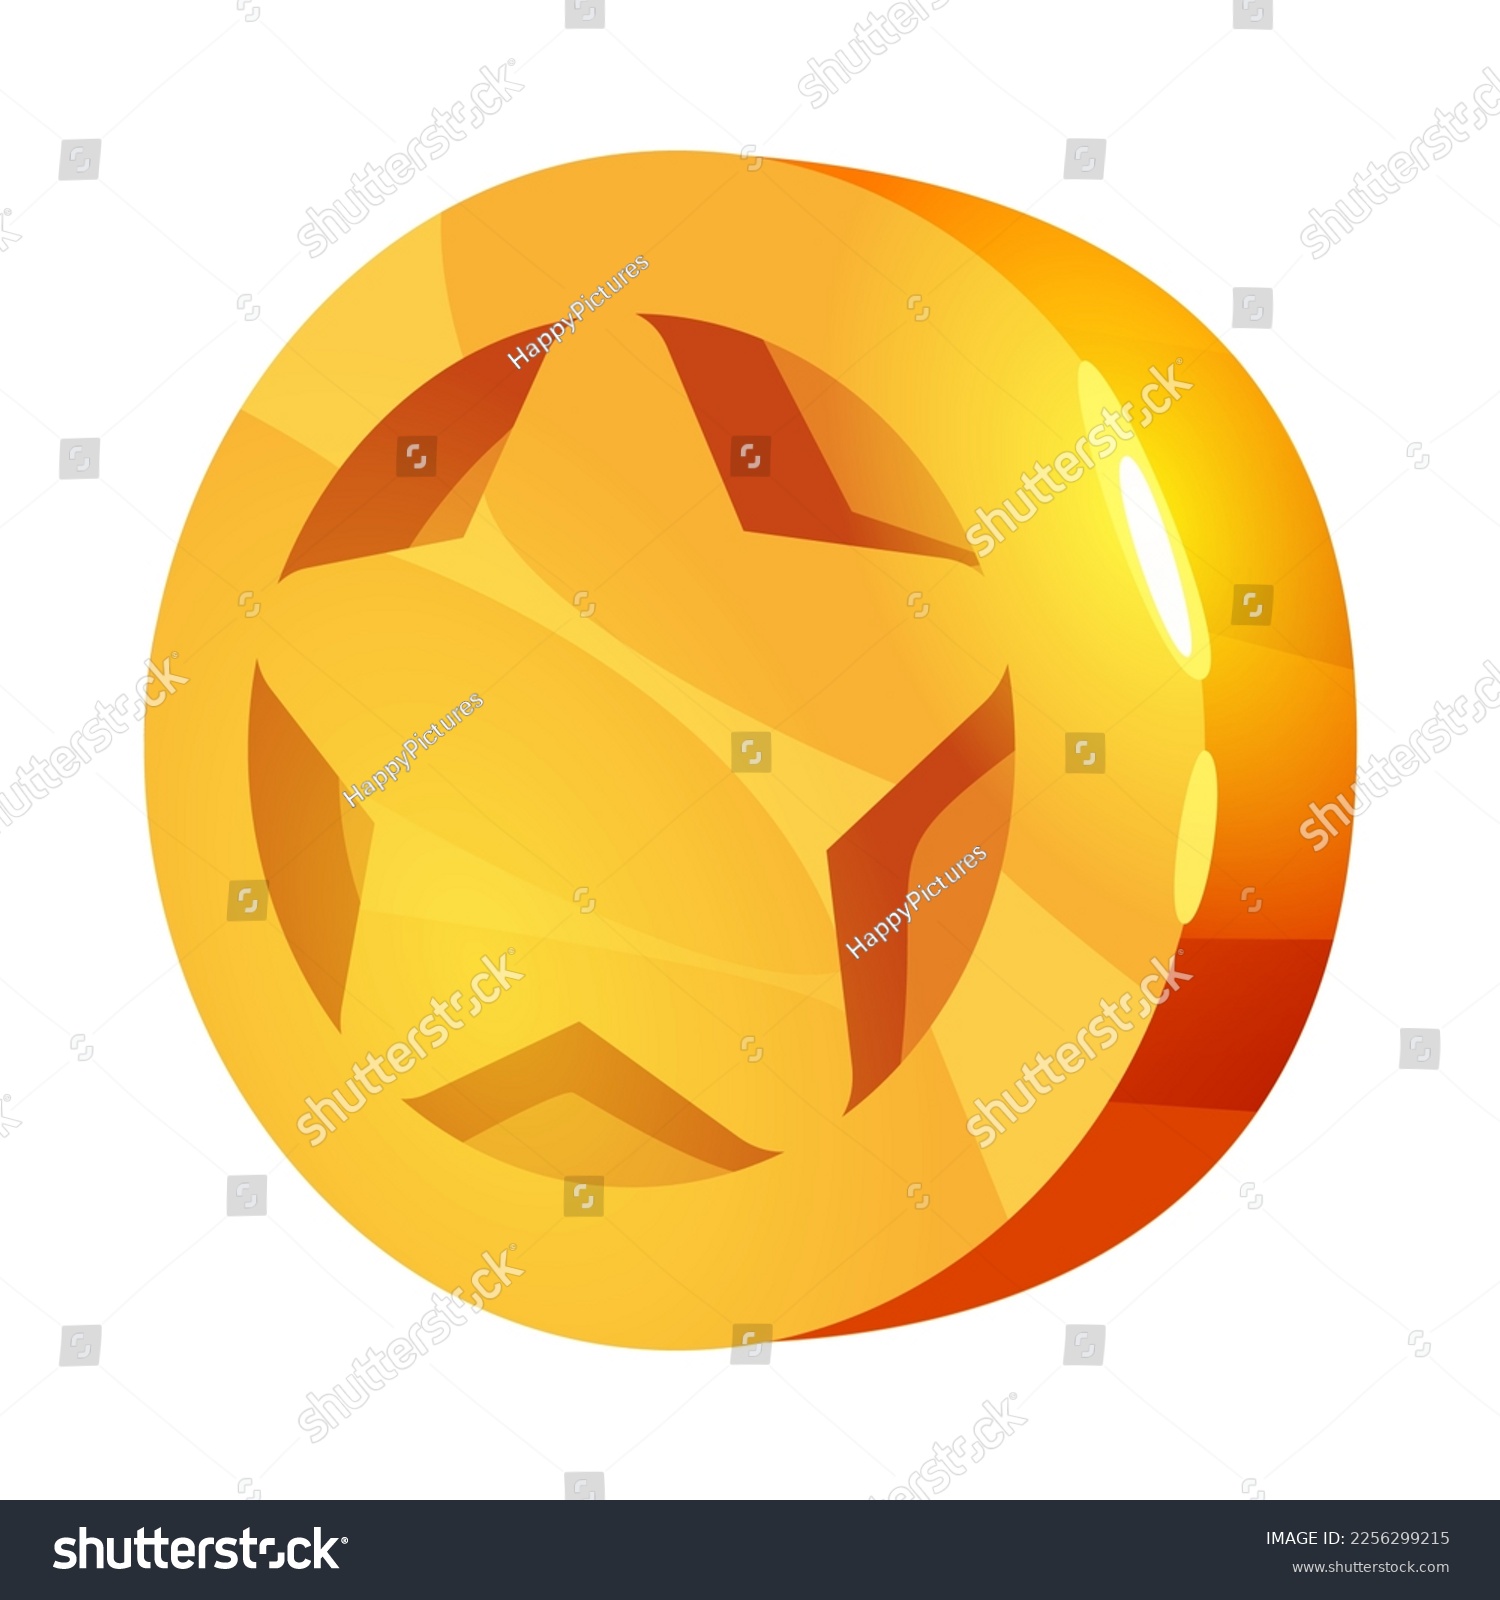 SVG of Golden Coin or Token as Game Object Vector Illustration svg